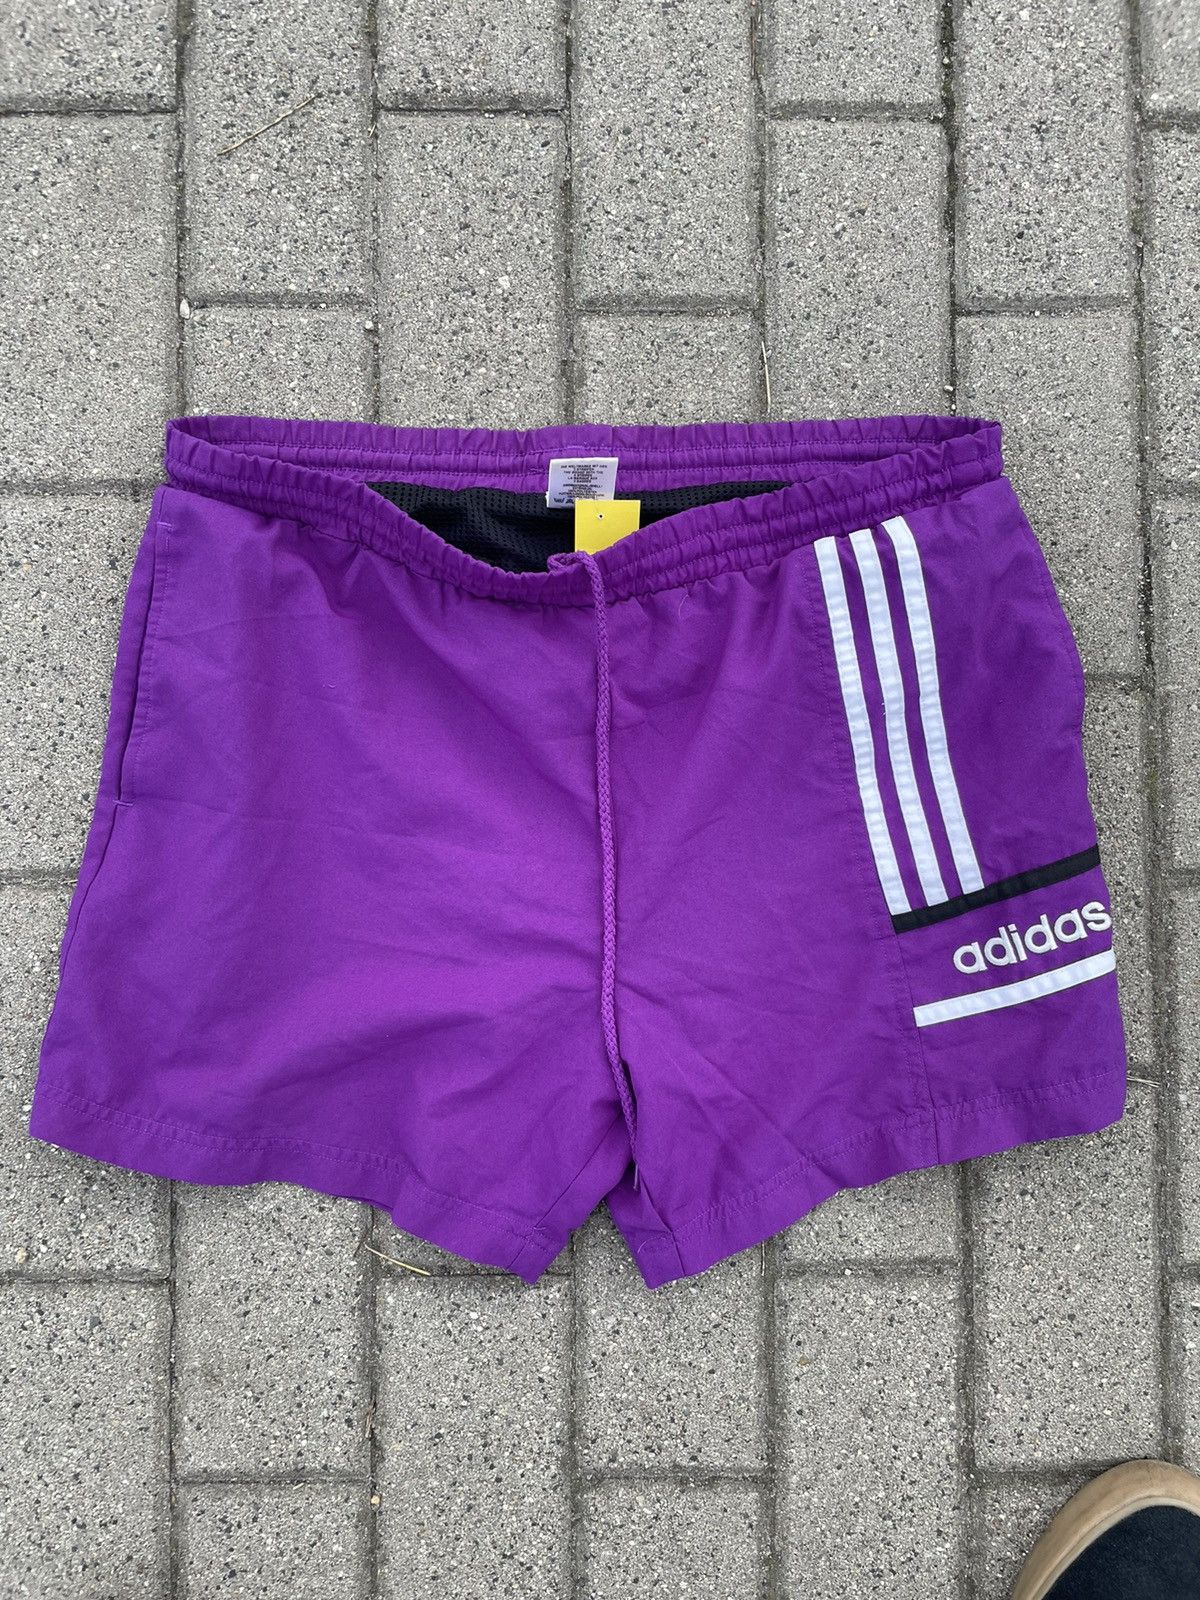 Adidas Adidas shorts vintage 90’s purple colour | Grailed